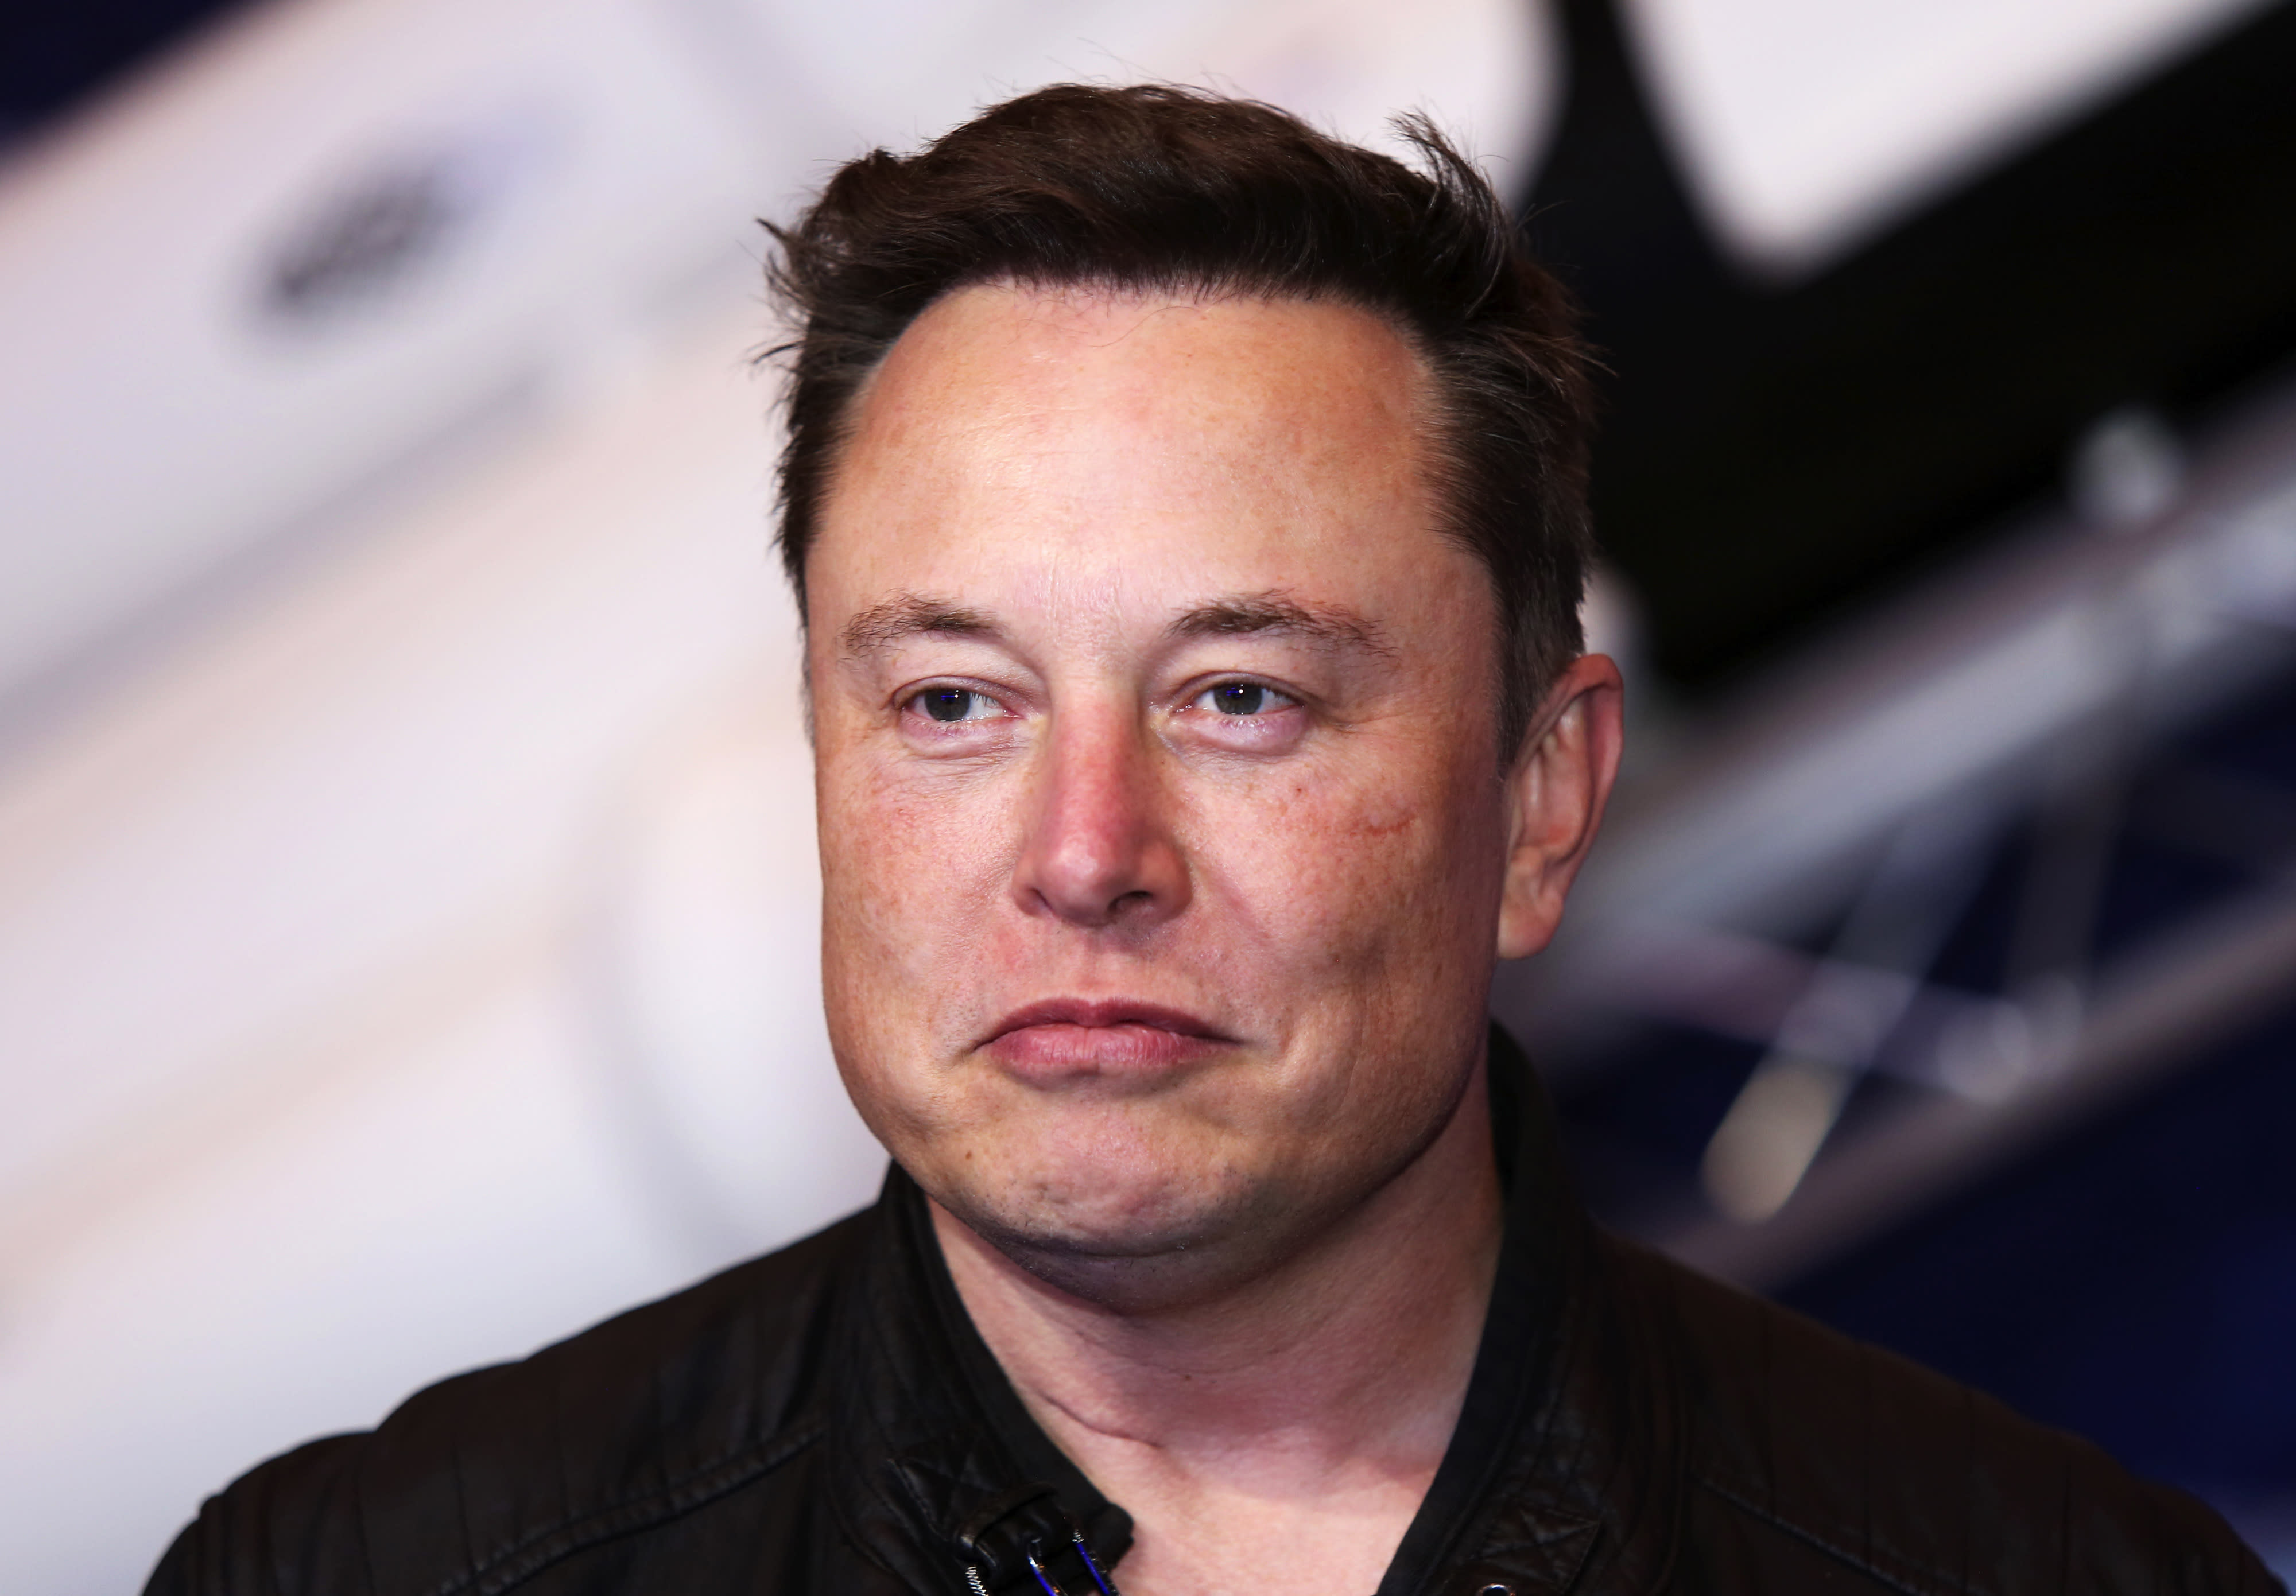 Elon Musk should apologize for mocking gender pronouns, says HRC